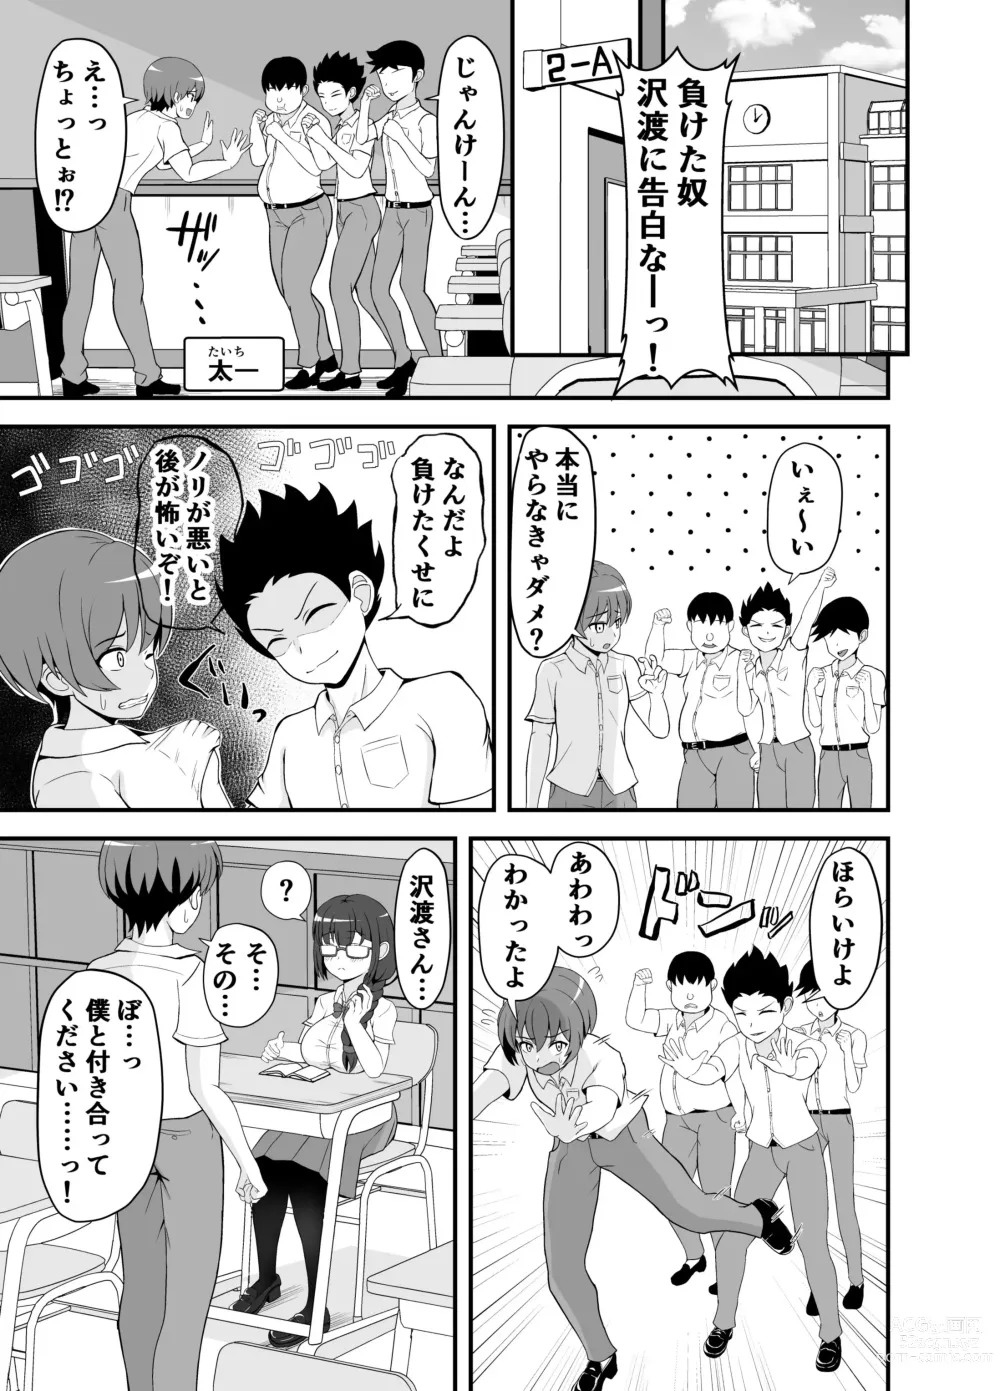 Page 2 of doujinshi 罰ゲームで告白した陰キャ彼女がドSだった件